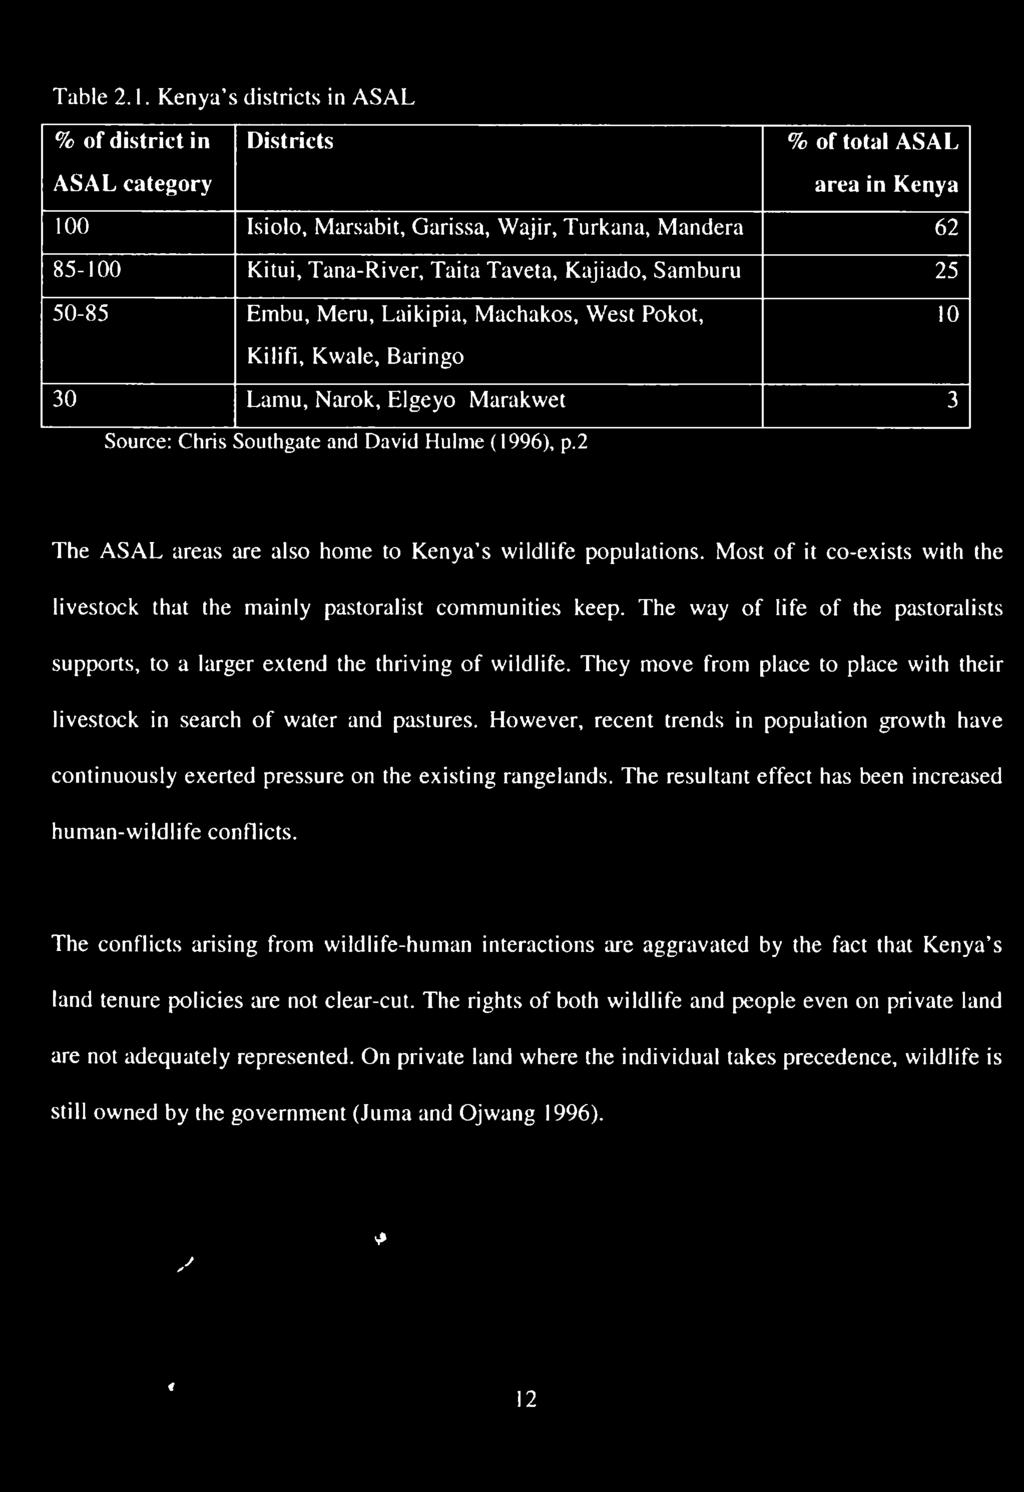 Kajiado, Samburu 25 50-85 Embu, Meru, Laikipia, Machakos, West Pokot, Kilifi, Kwale, Baringo 10 30 Lamu, Narok, Elgeyo Marakwet 3 Source: Chris Southgate and David Hulme (1996), p.